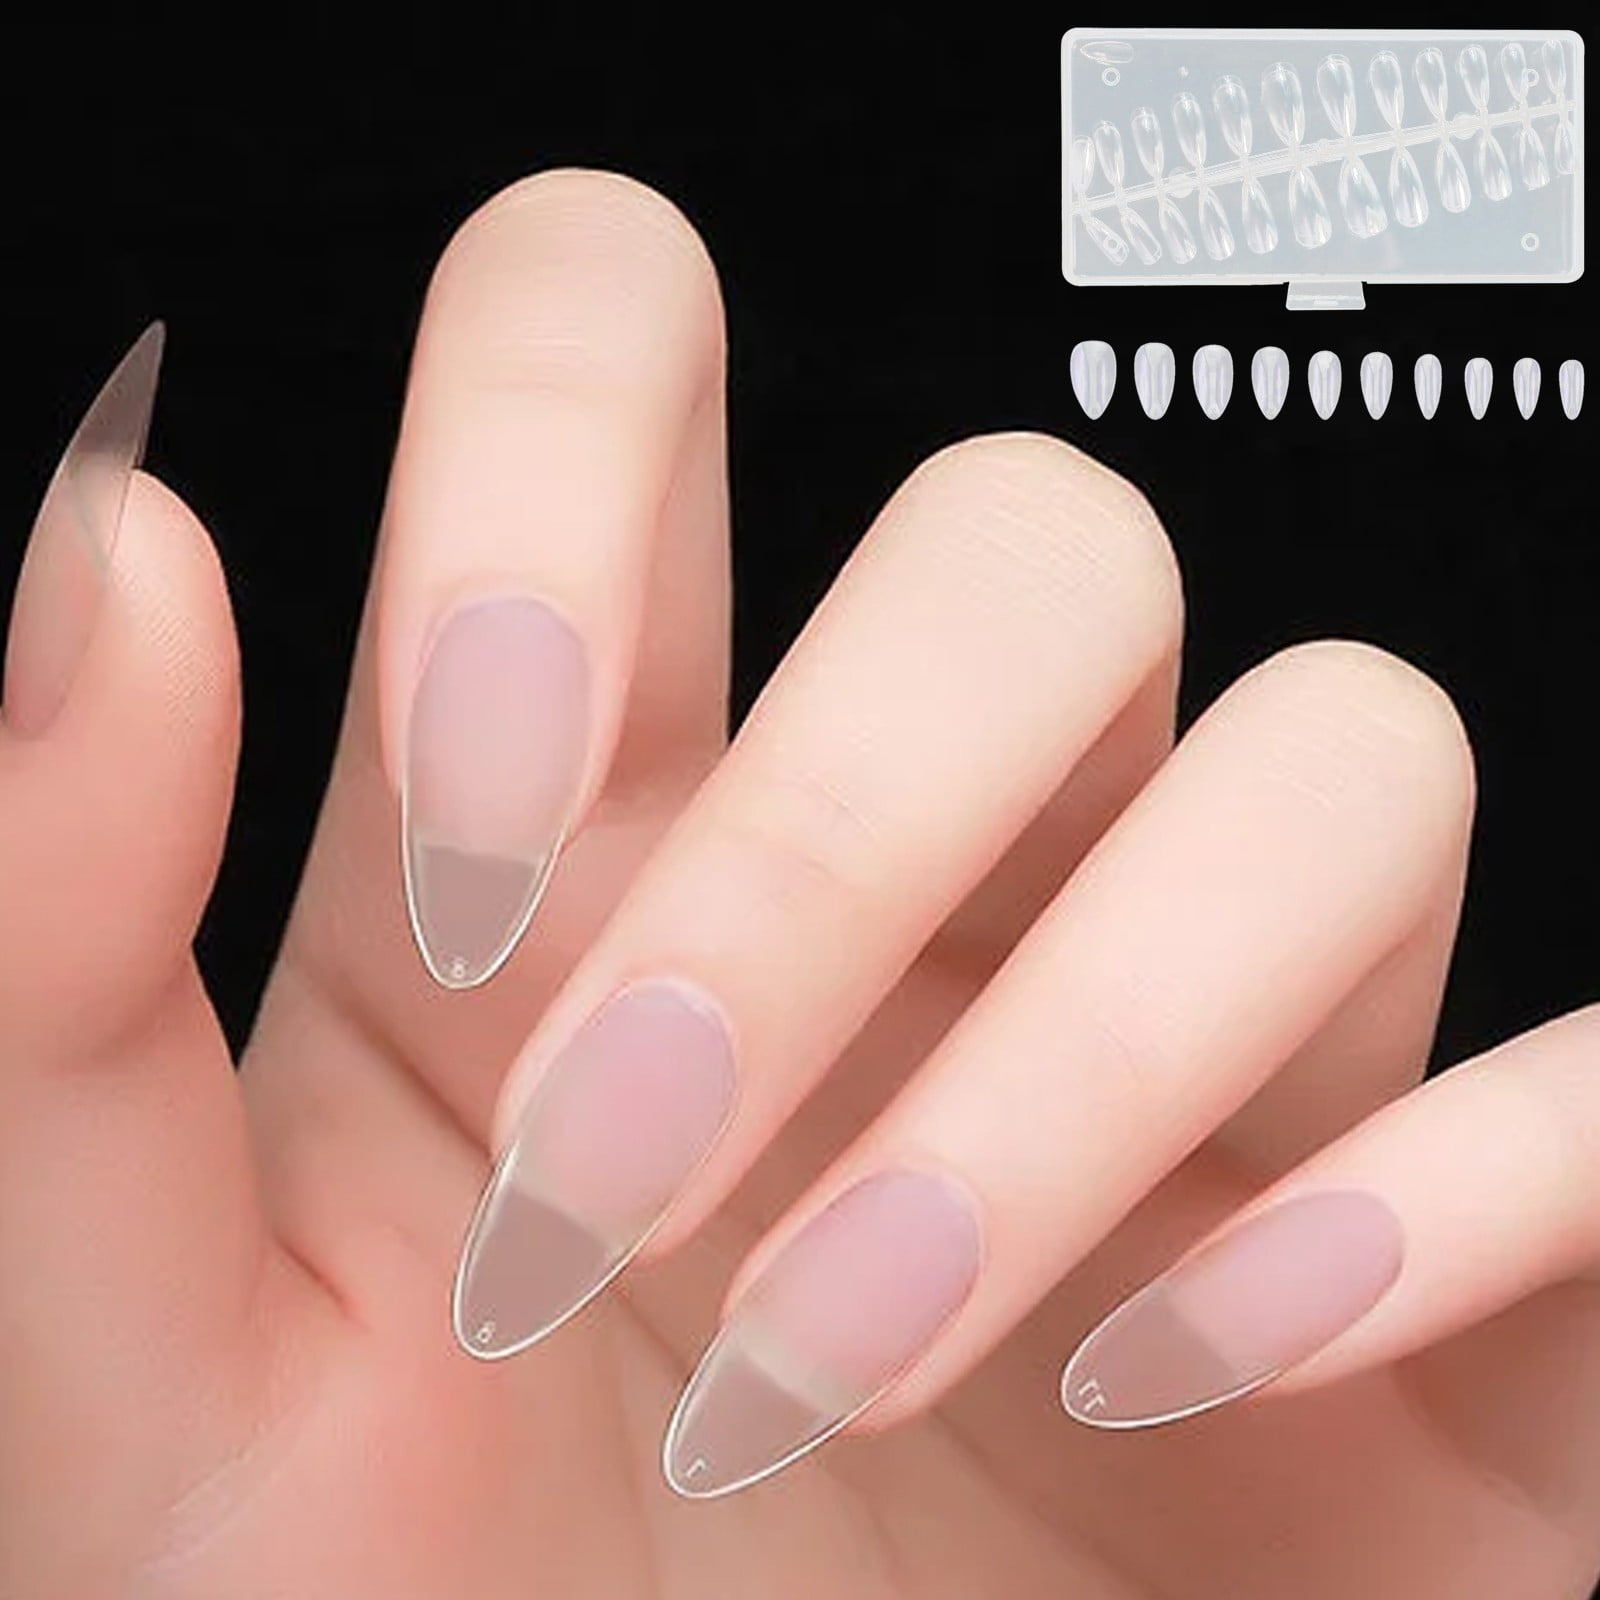 Pjtewawe Easter nails custom semicured gel nail sticker real nail polish  strips - Walmart.com